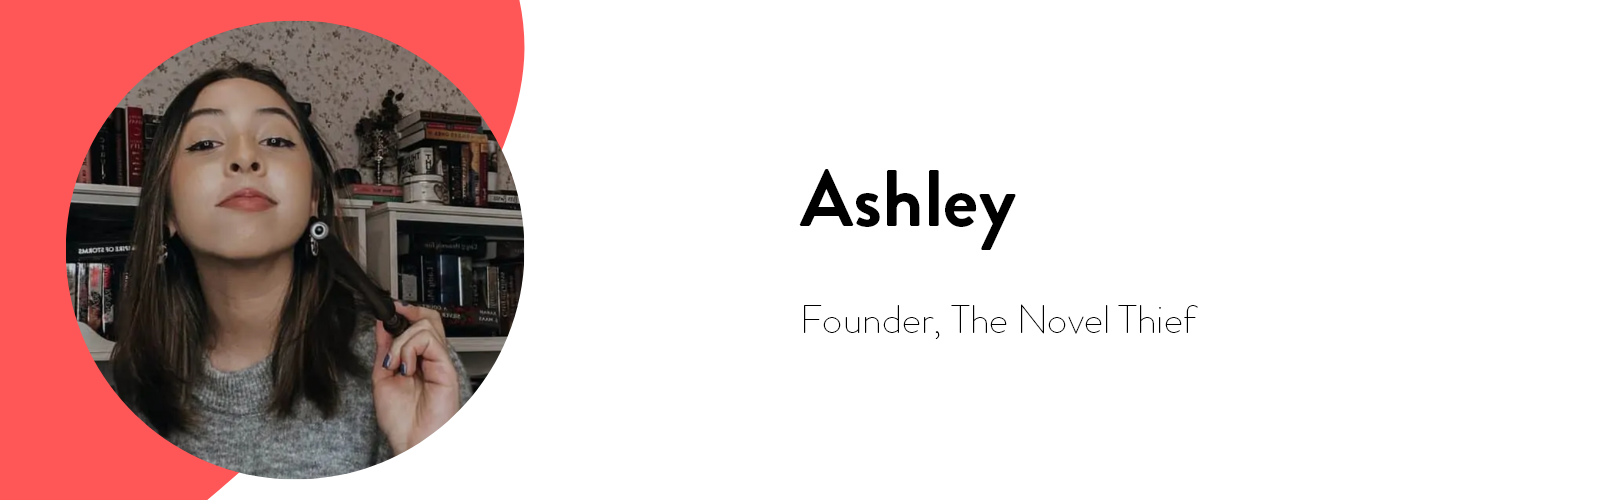 Ashley, the novel thief